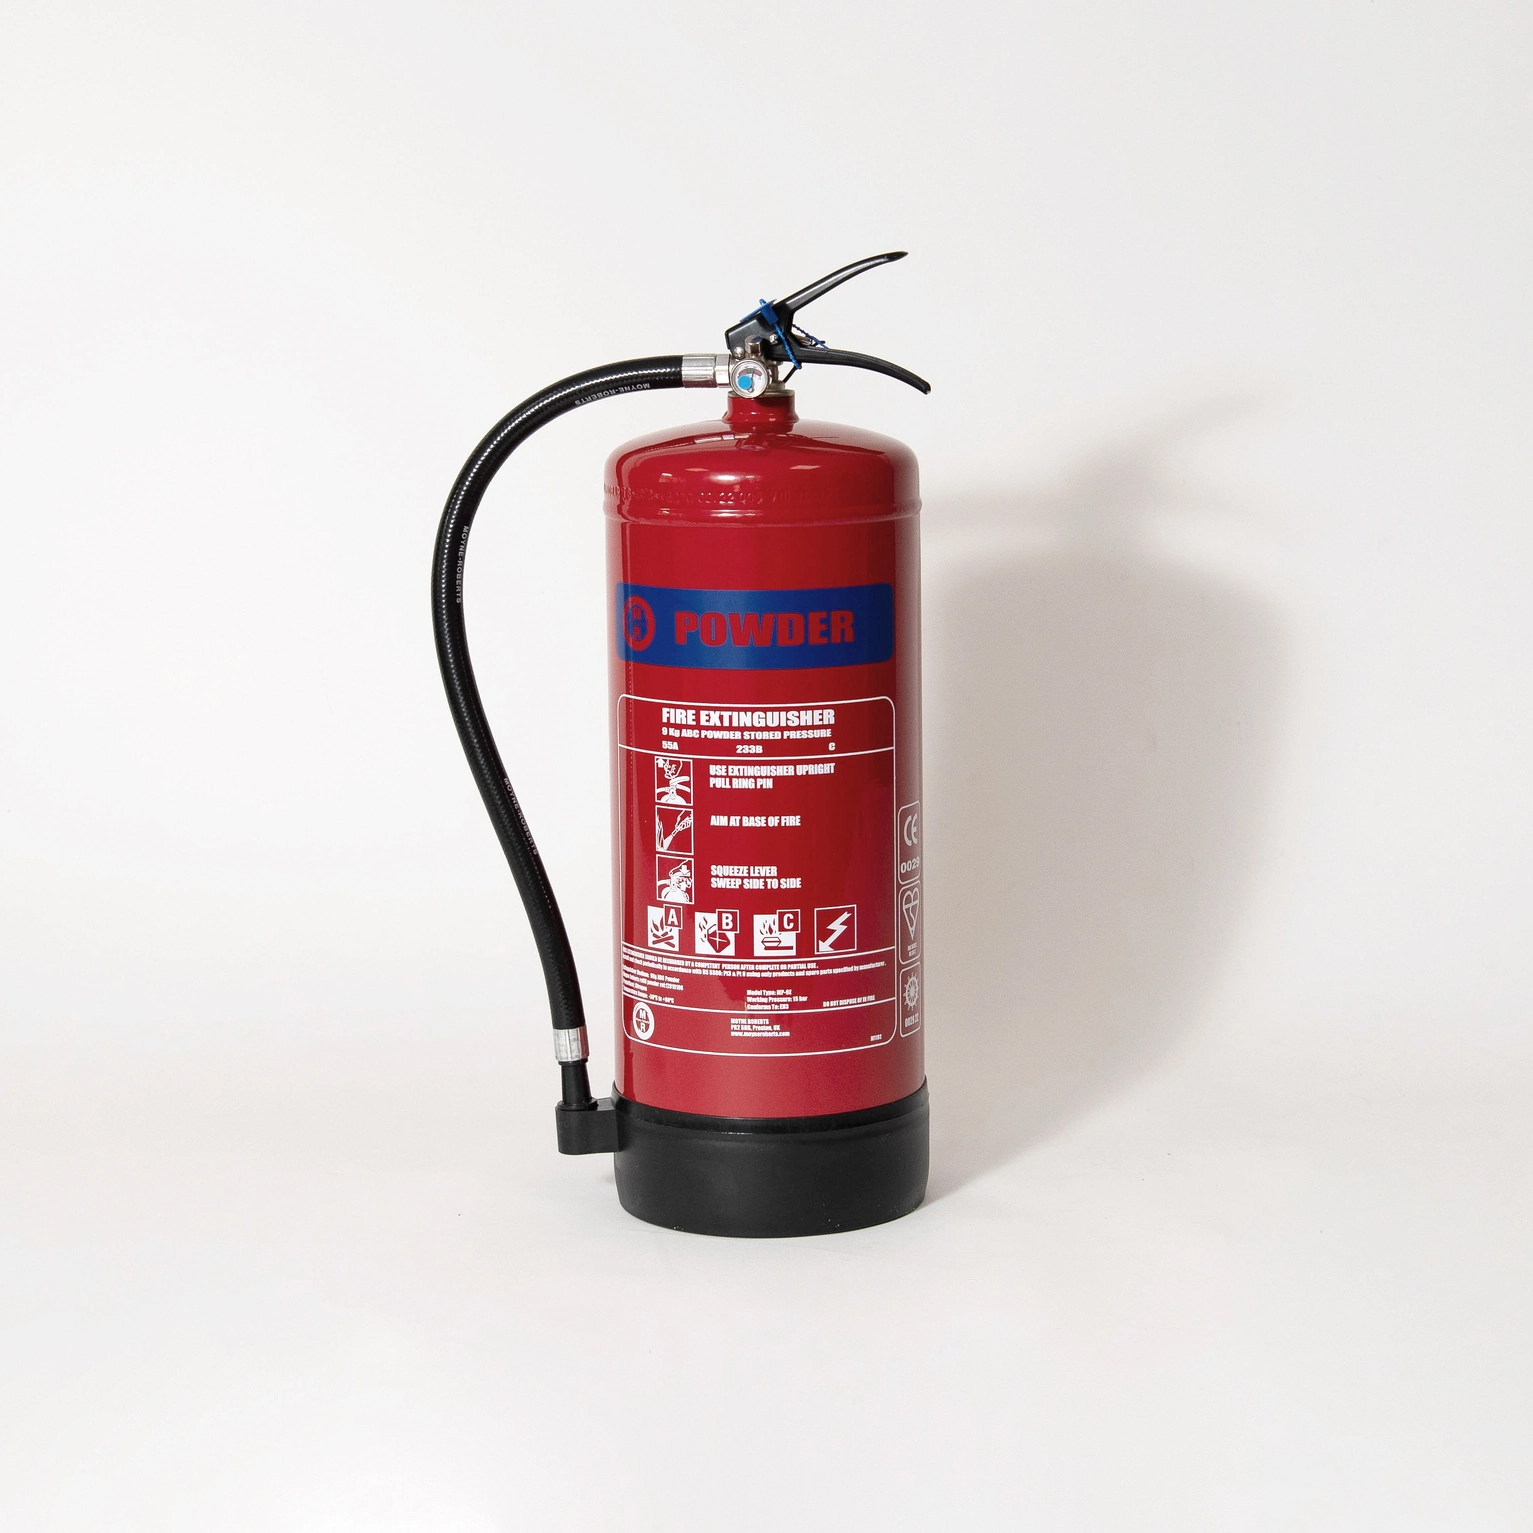 Blue fire extinguisher.